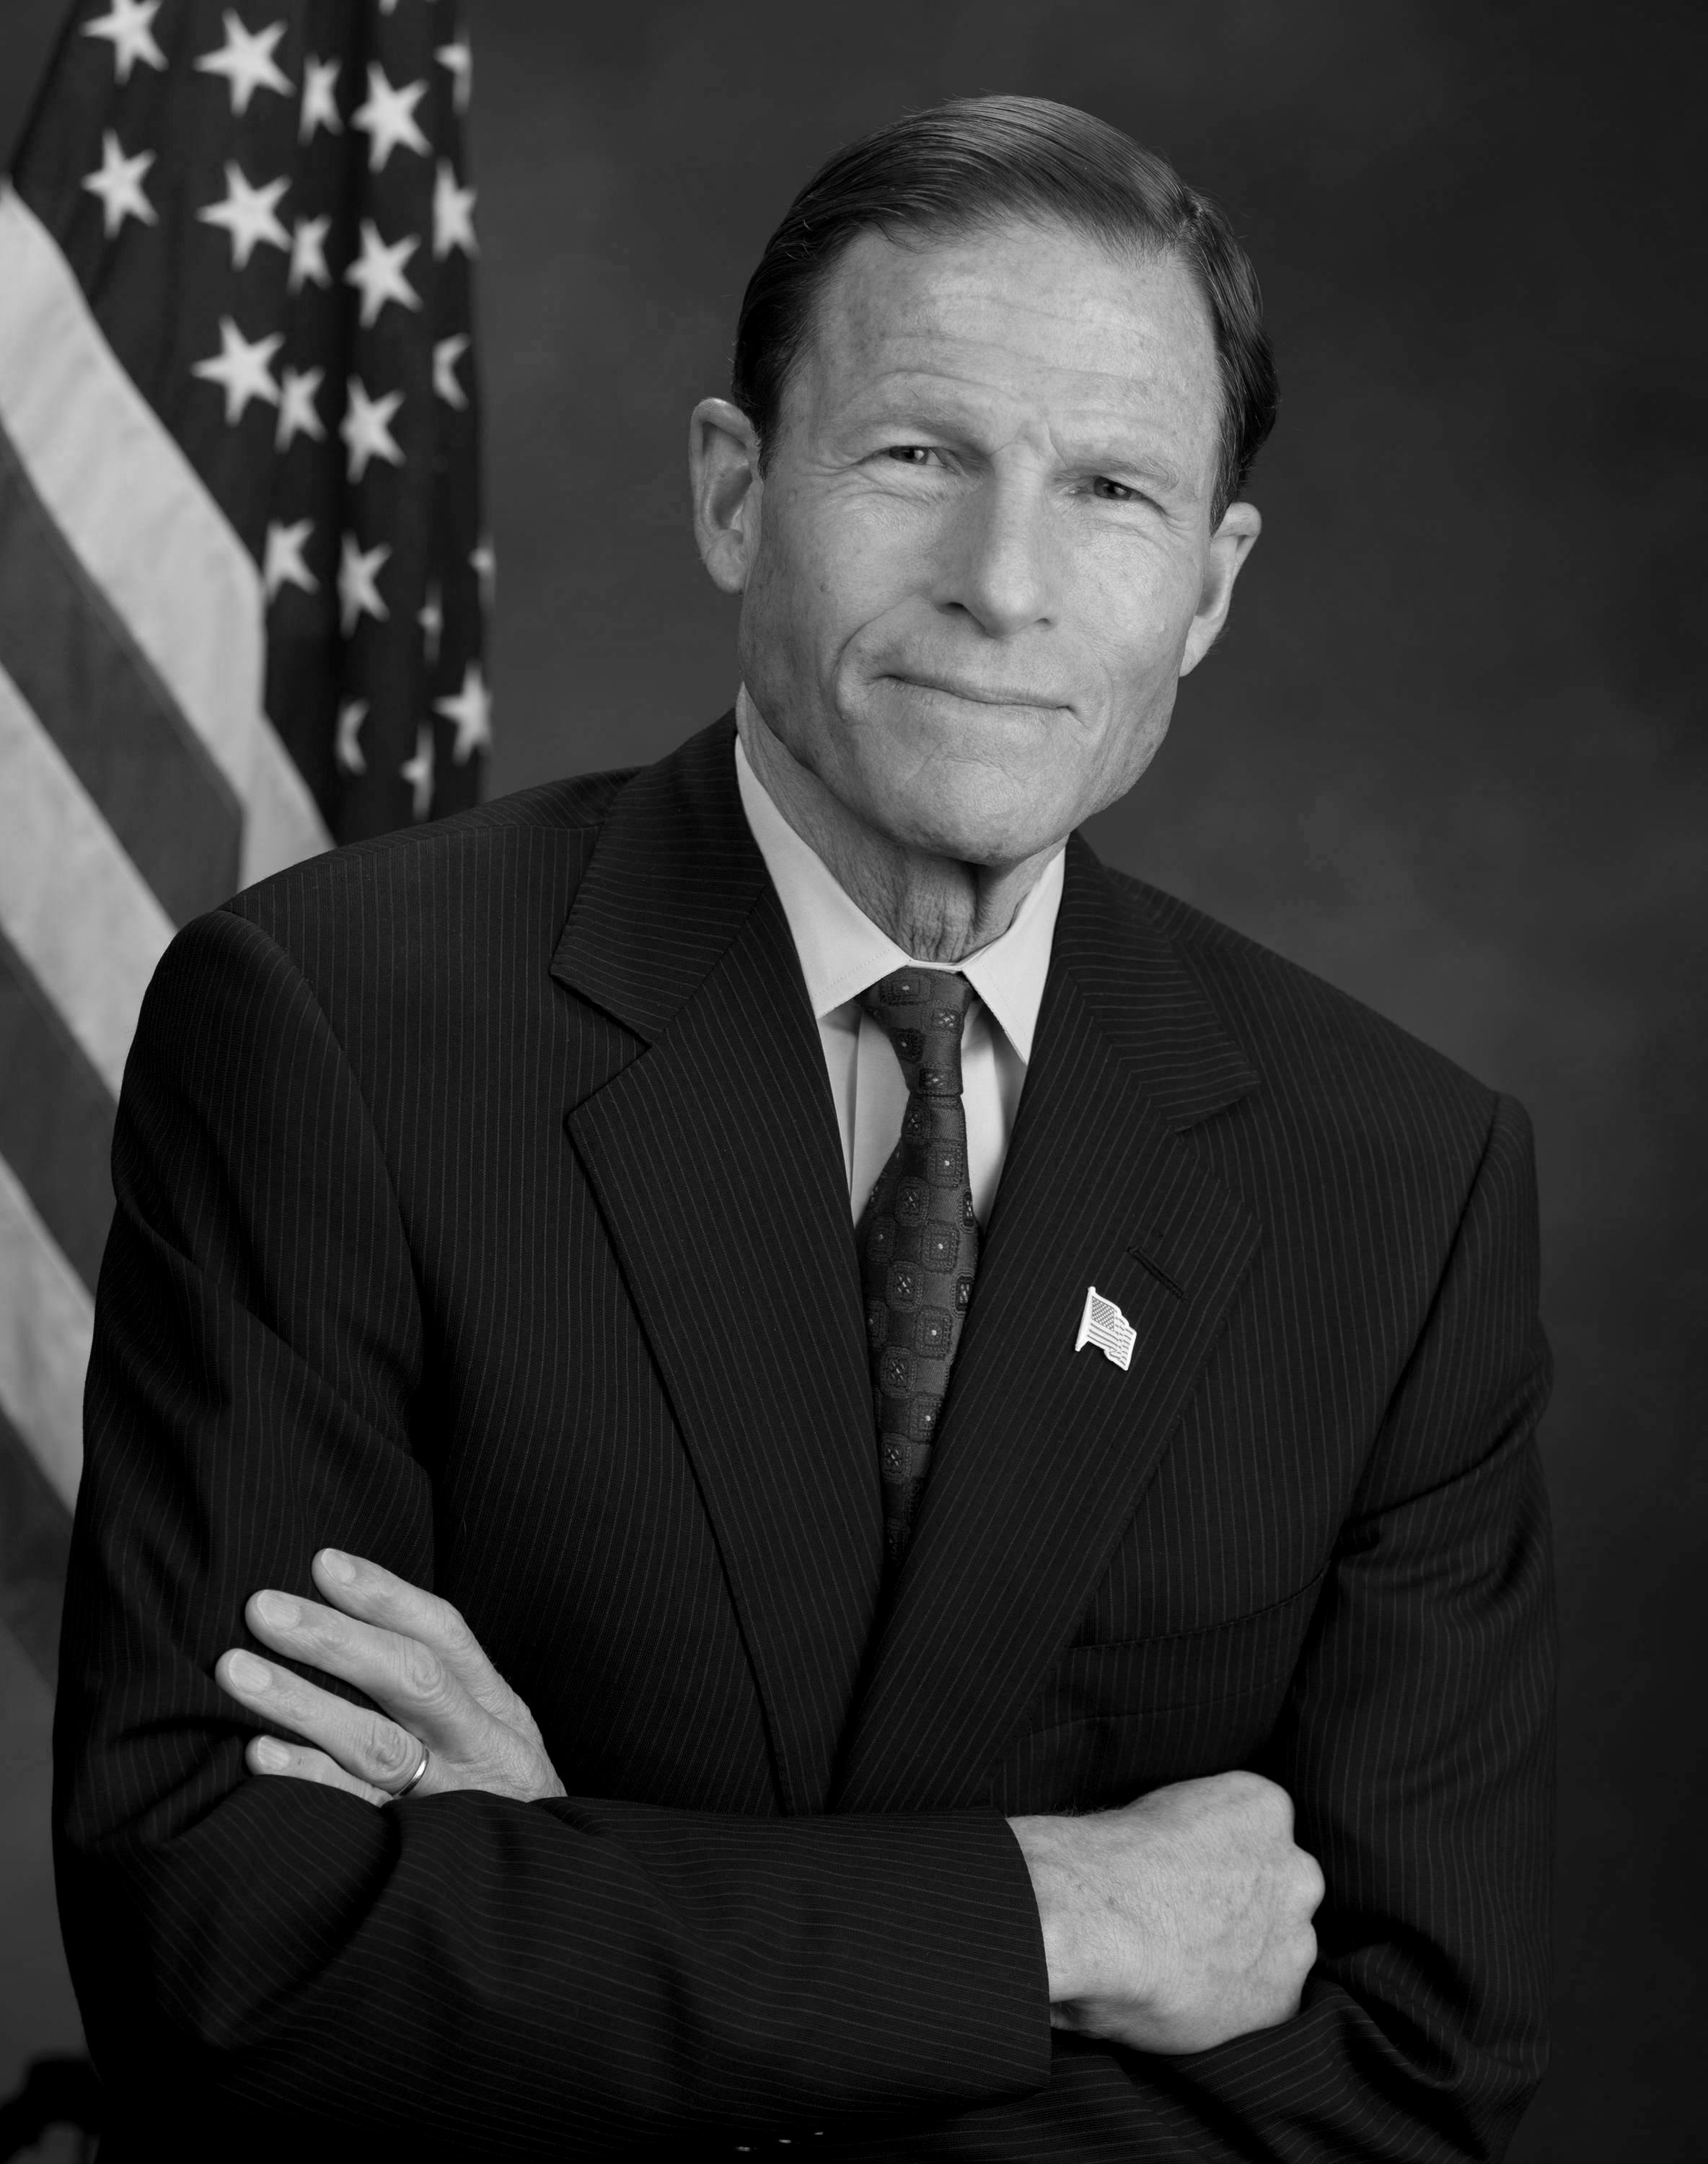 Senator Blumenthal 